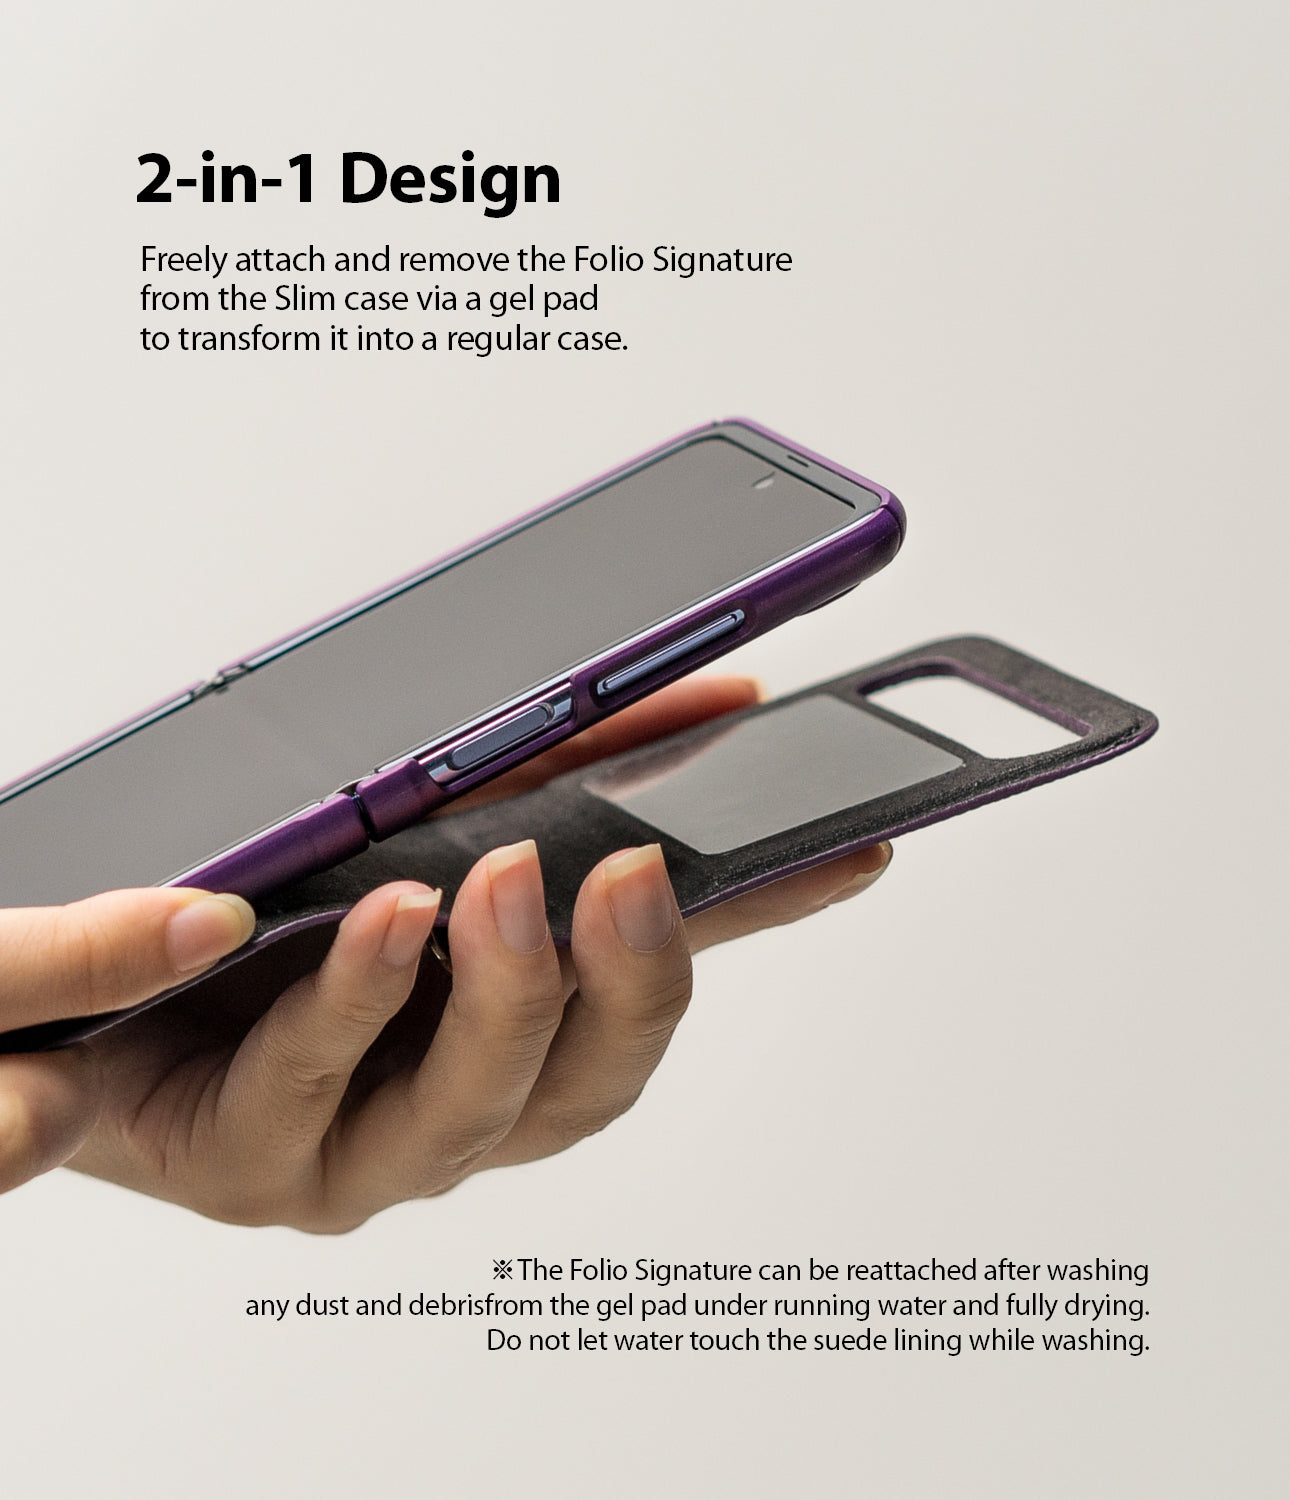 FODDOM Samsung Galaxy Z Flip 3 Case with Ring (Color: Purple)